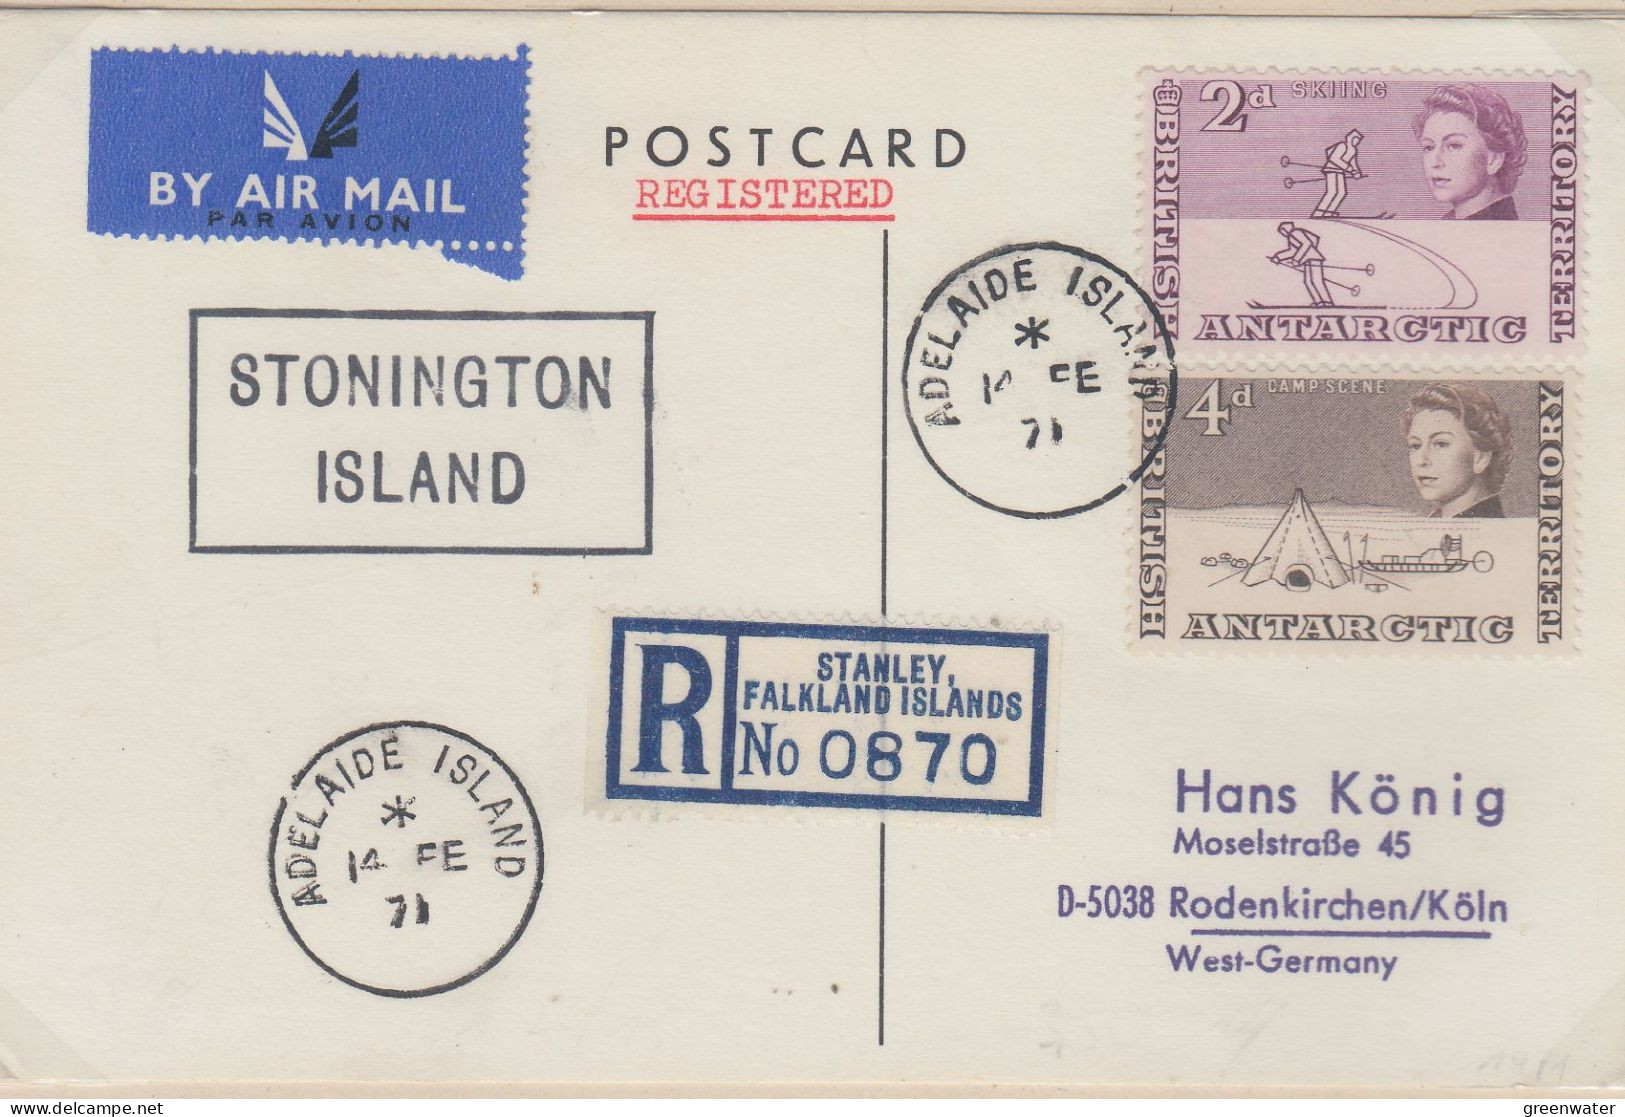 British Antarctic Territorry (BAT) 1971 Stonington Island Registered  Postcard Ca Adelaide Island 14 FEB 1971 (HA153A) - Covers & Documents